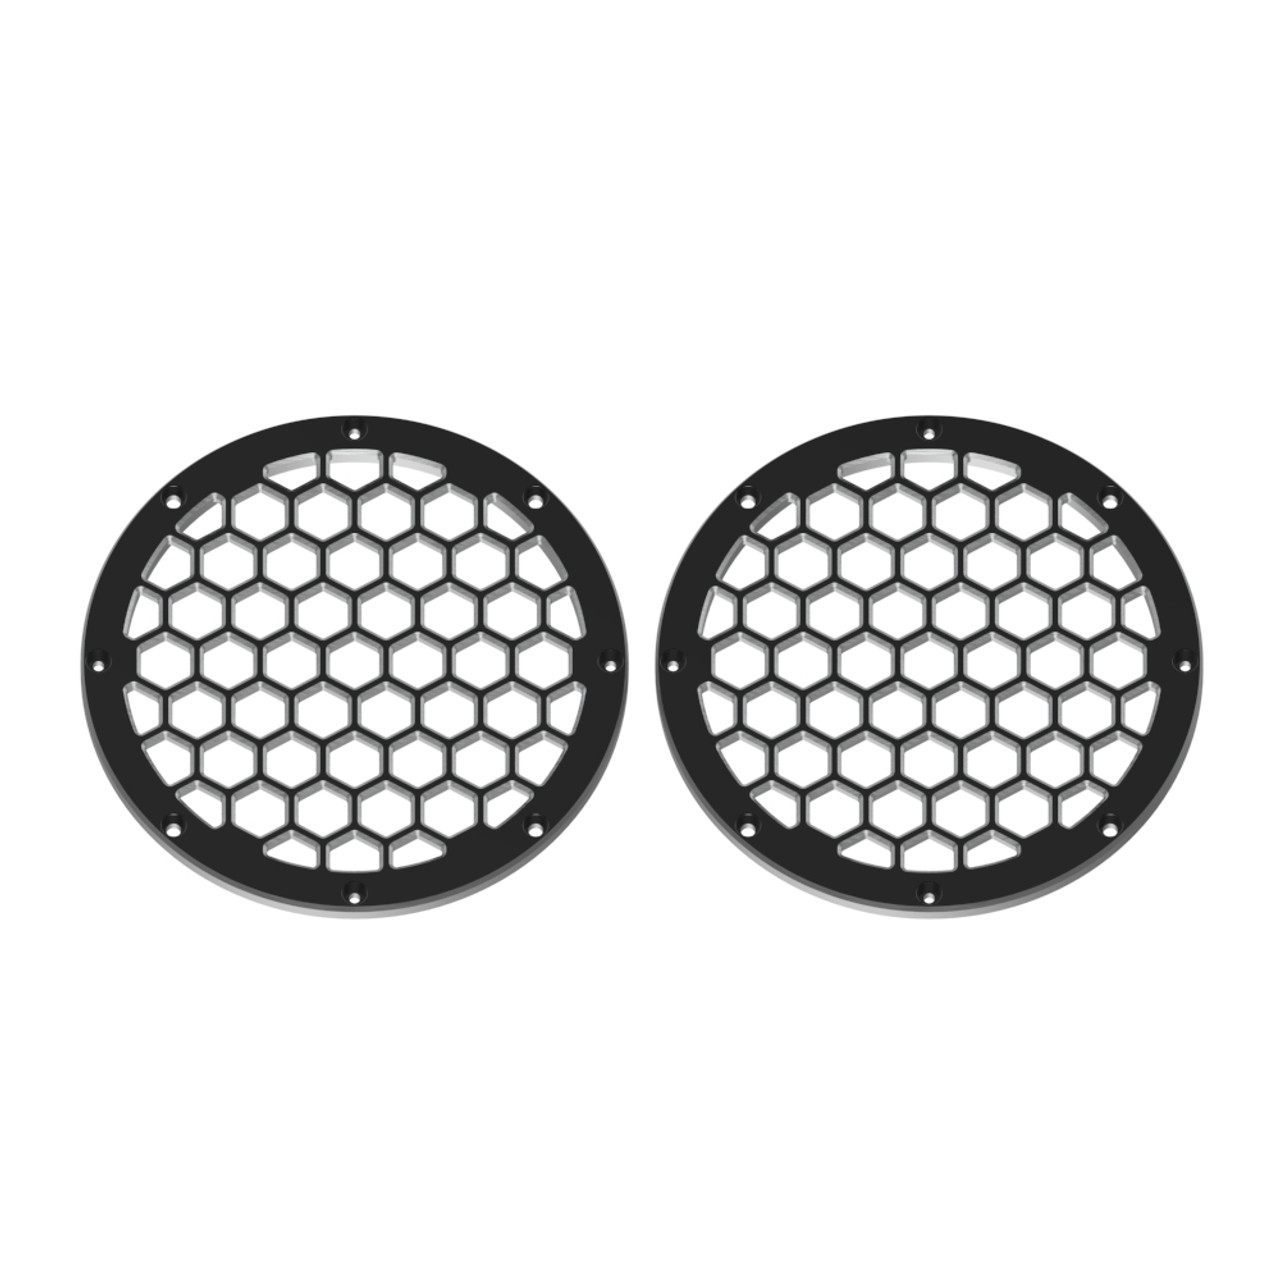 6.5 inch HEX Speaker Grills - Black Contrast Cut Cnc Metal Grills